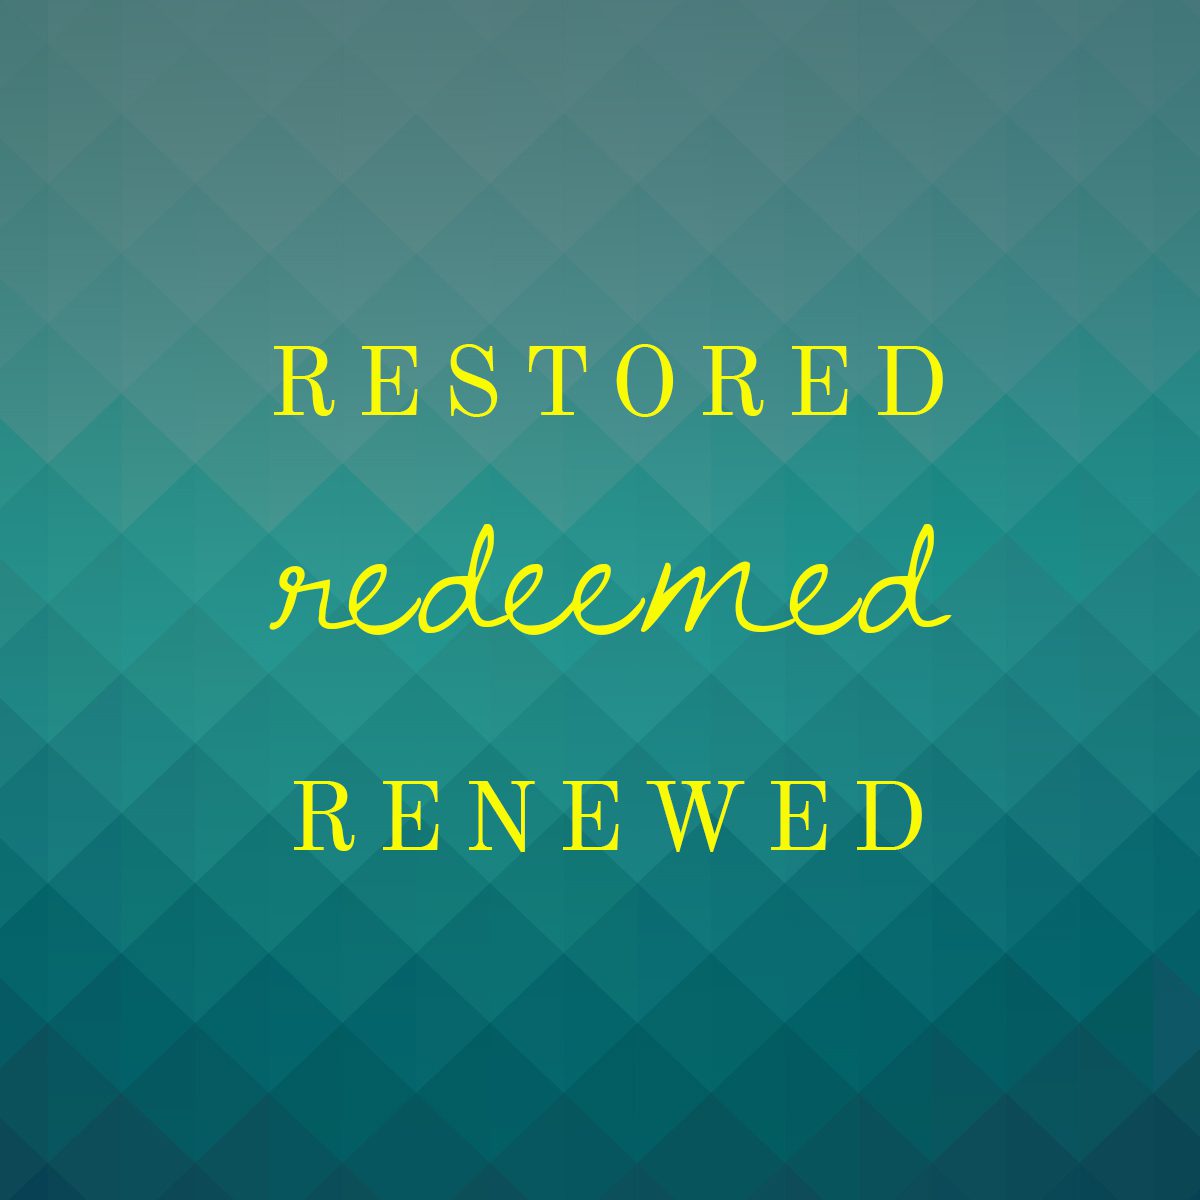 Refresh and Renewed!